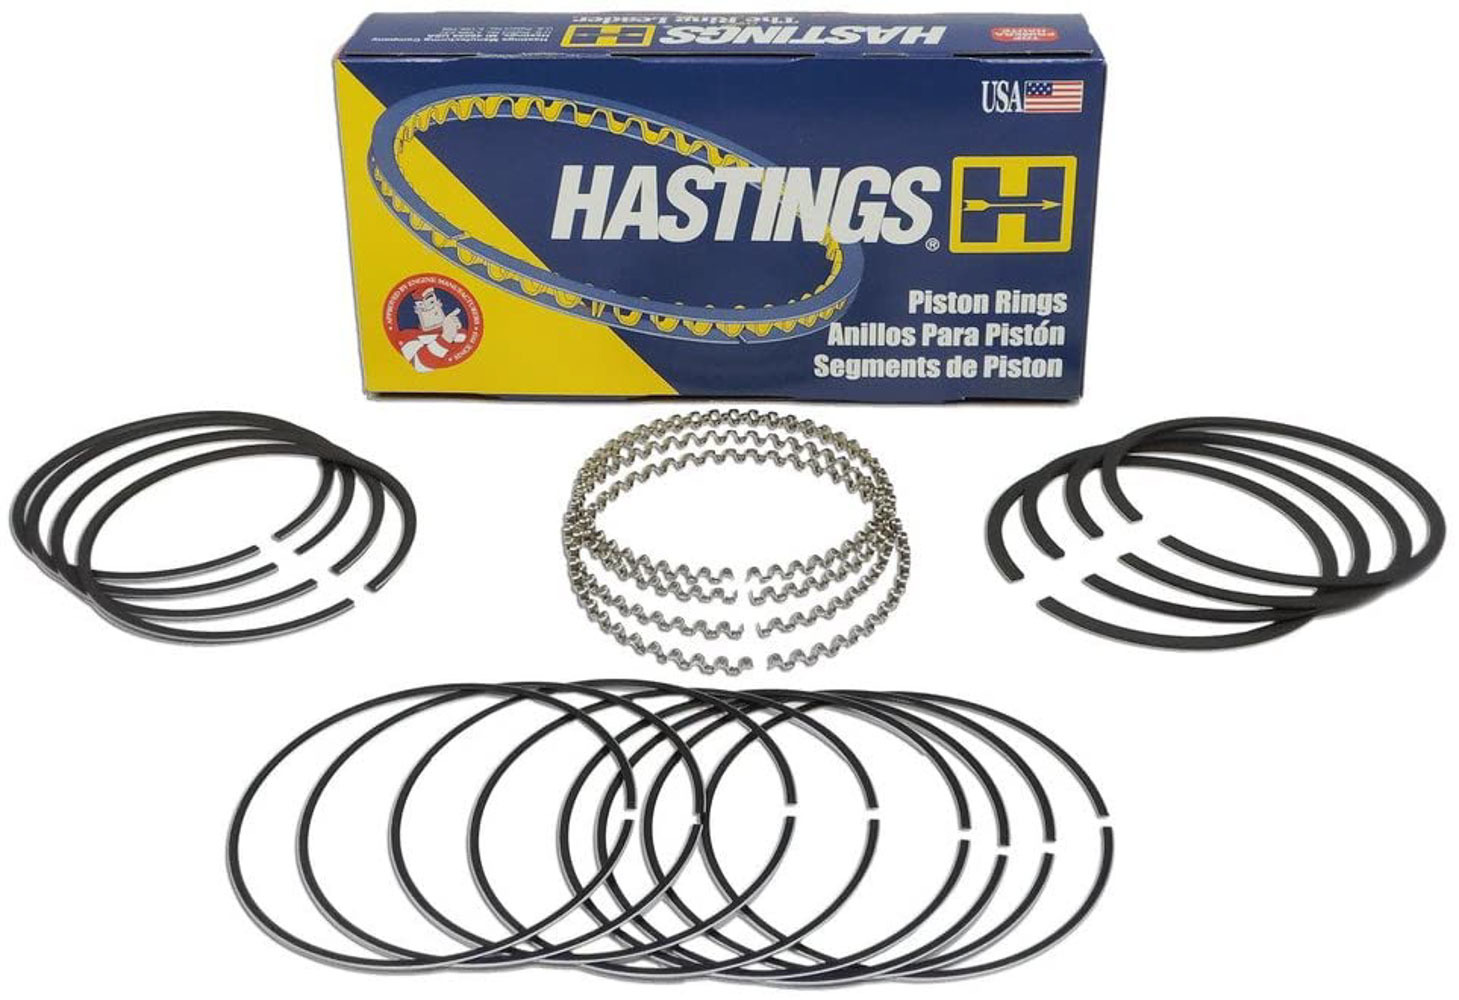 Hastings Piston Rings 5499 - Piston Ring Set 3.736 Bore 5/64 5/64 3/16